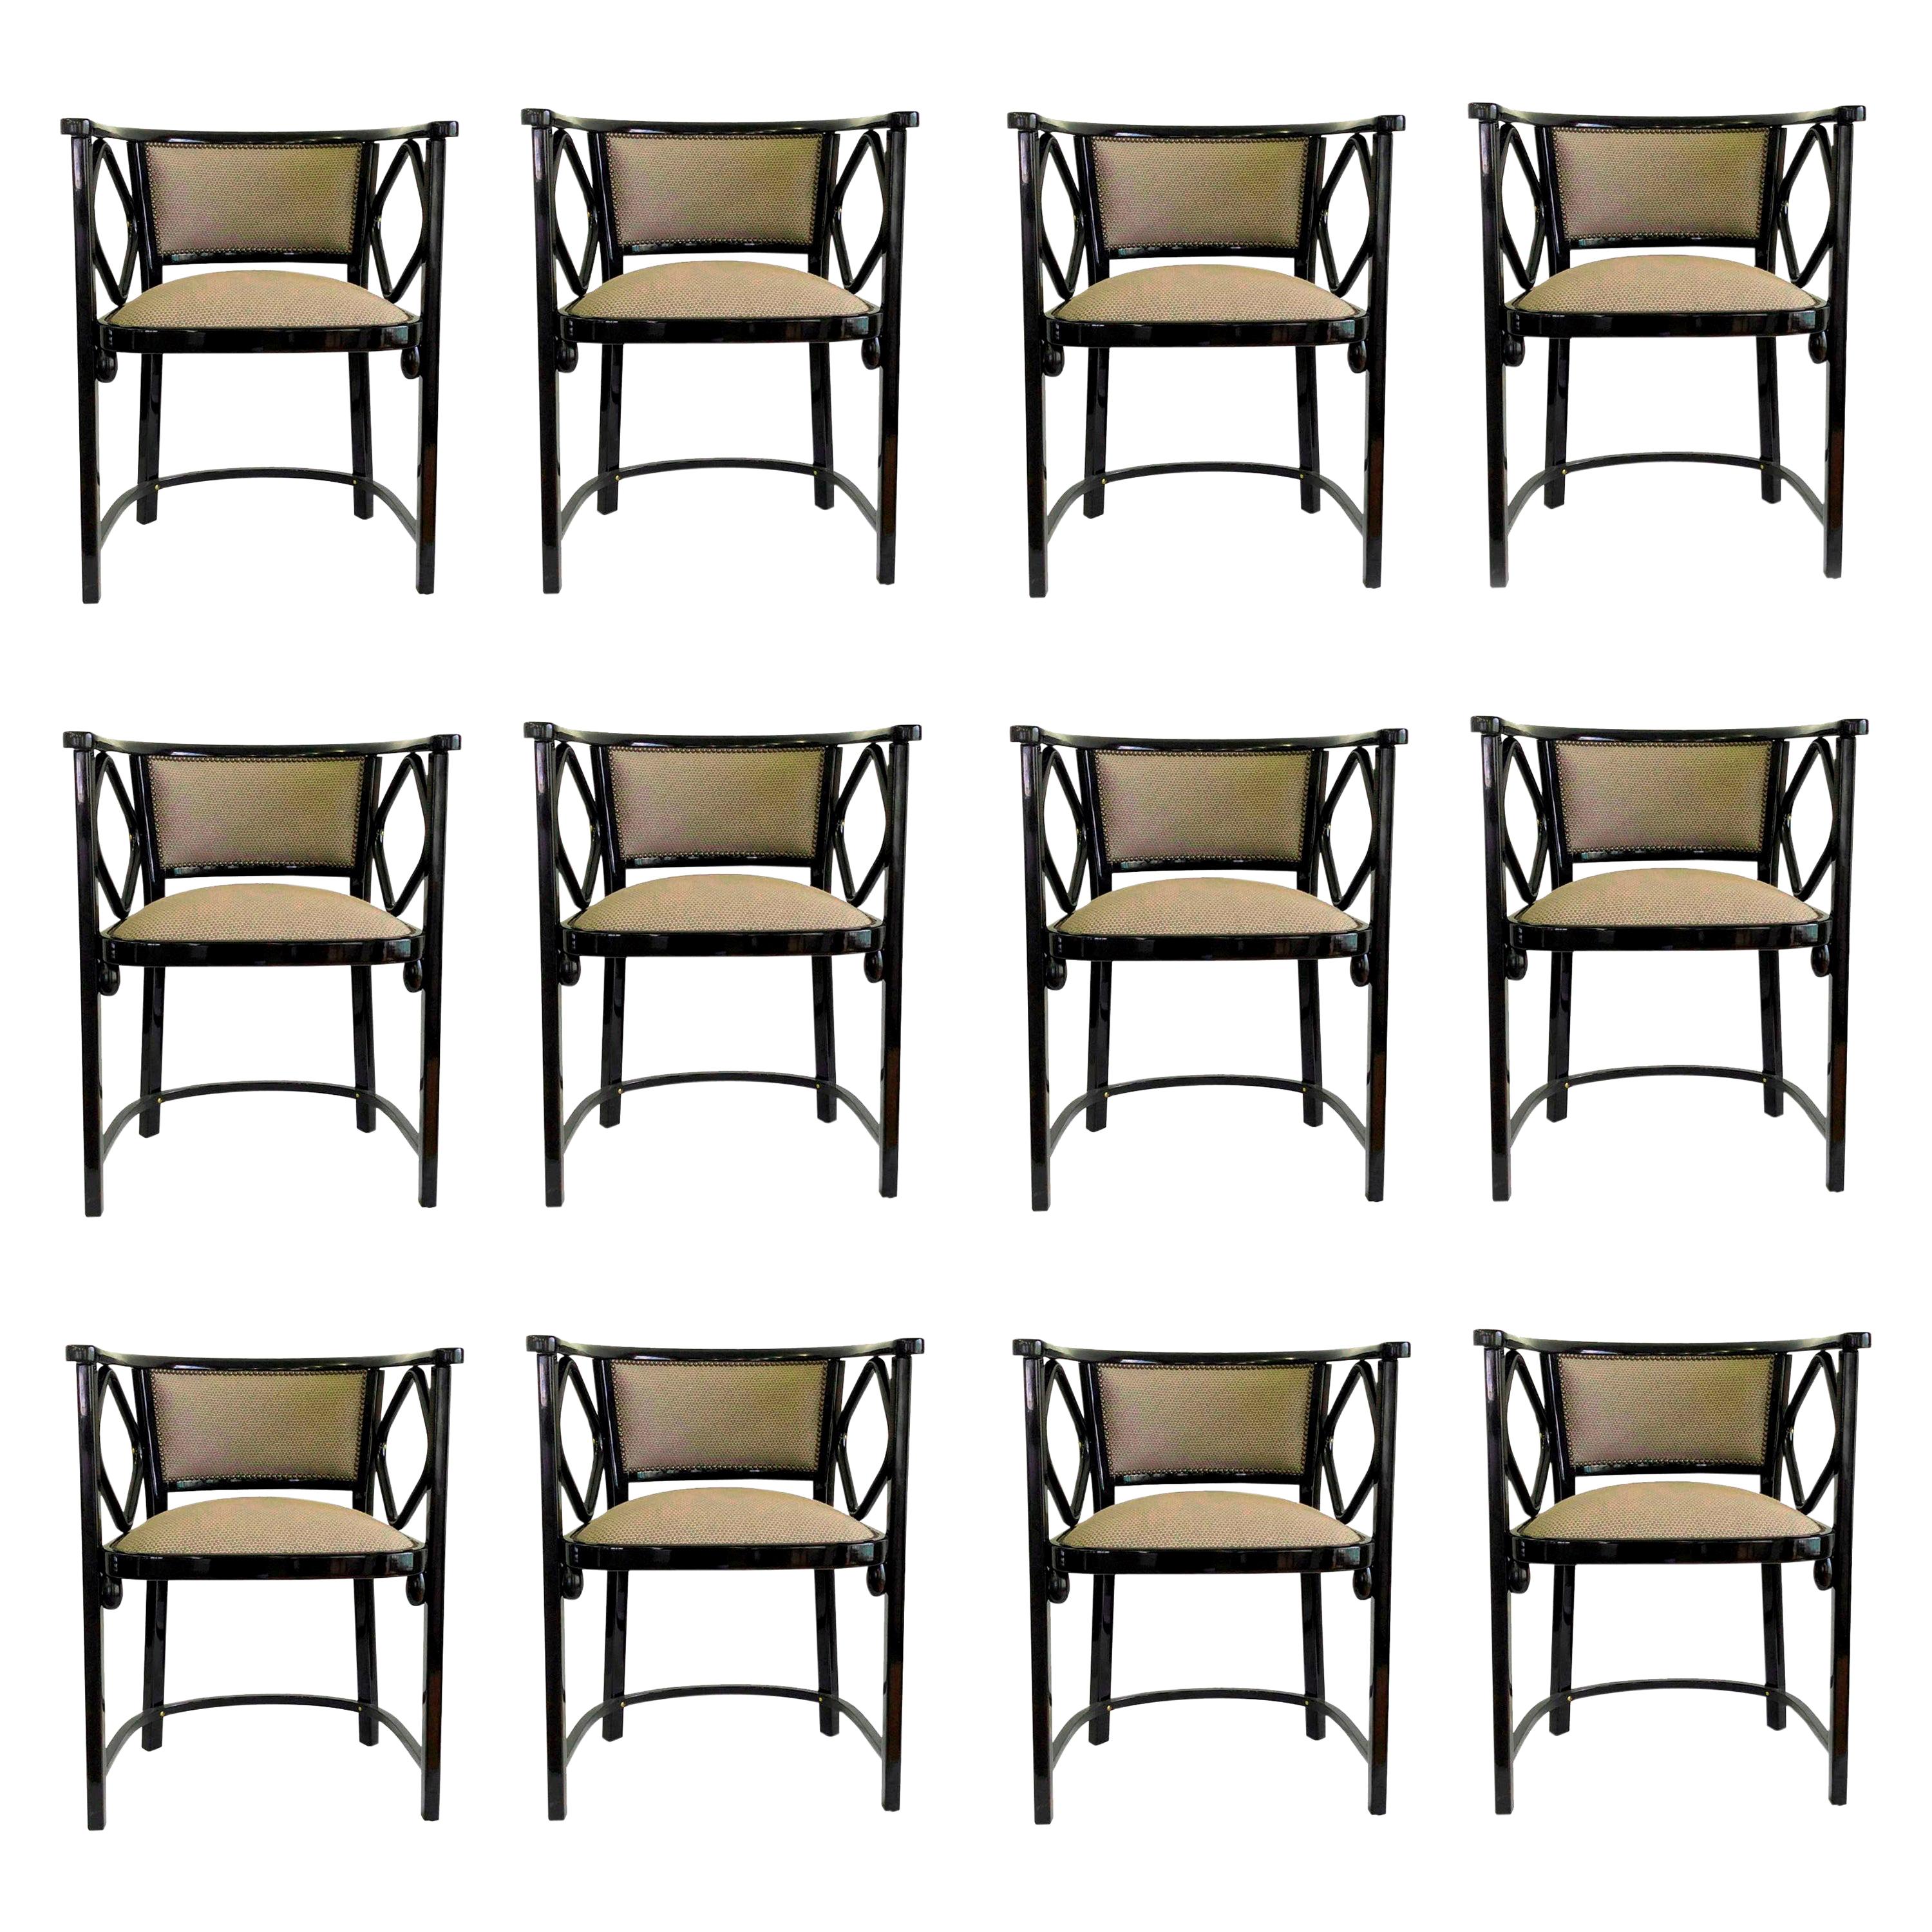 Great Set of 12 Armchairs by Thonet, Austria Josef Hoffmann Design